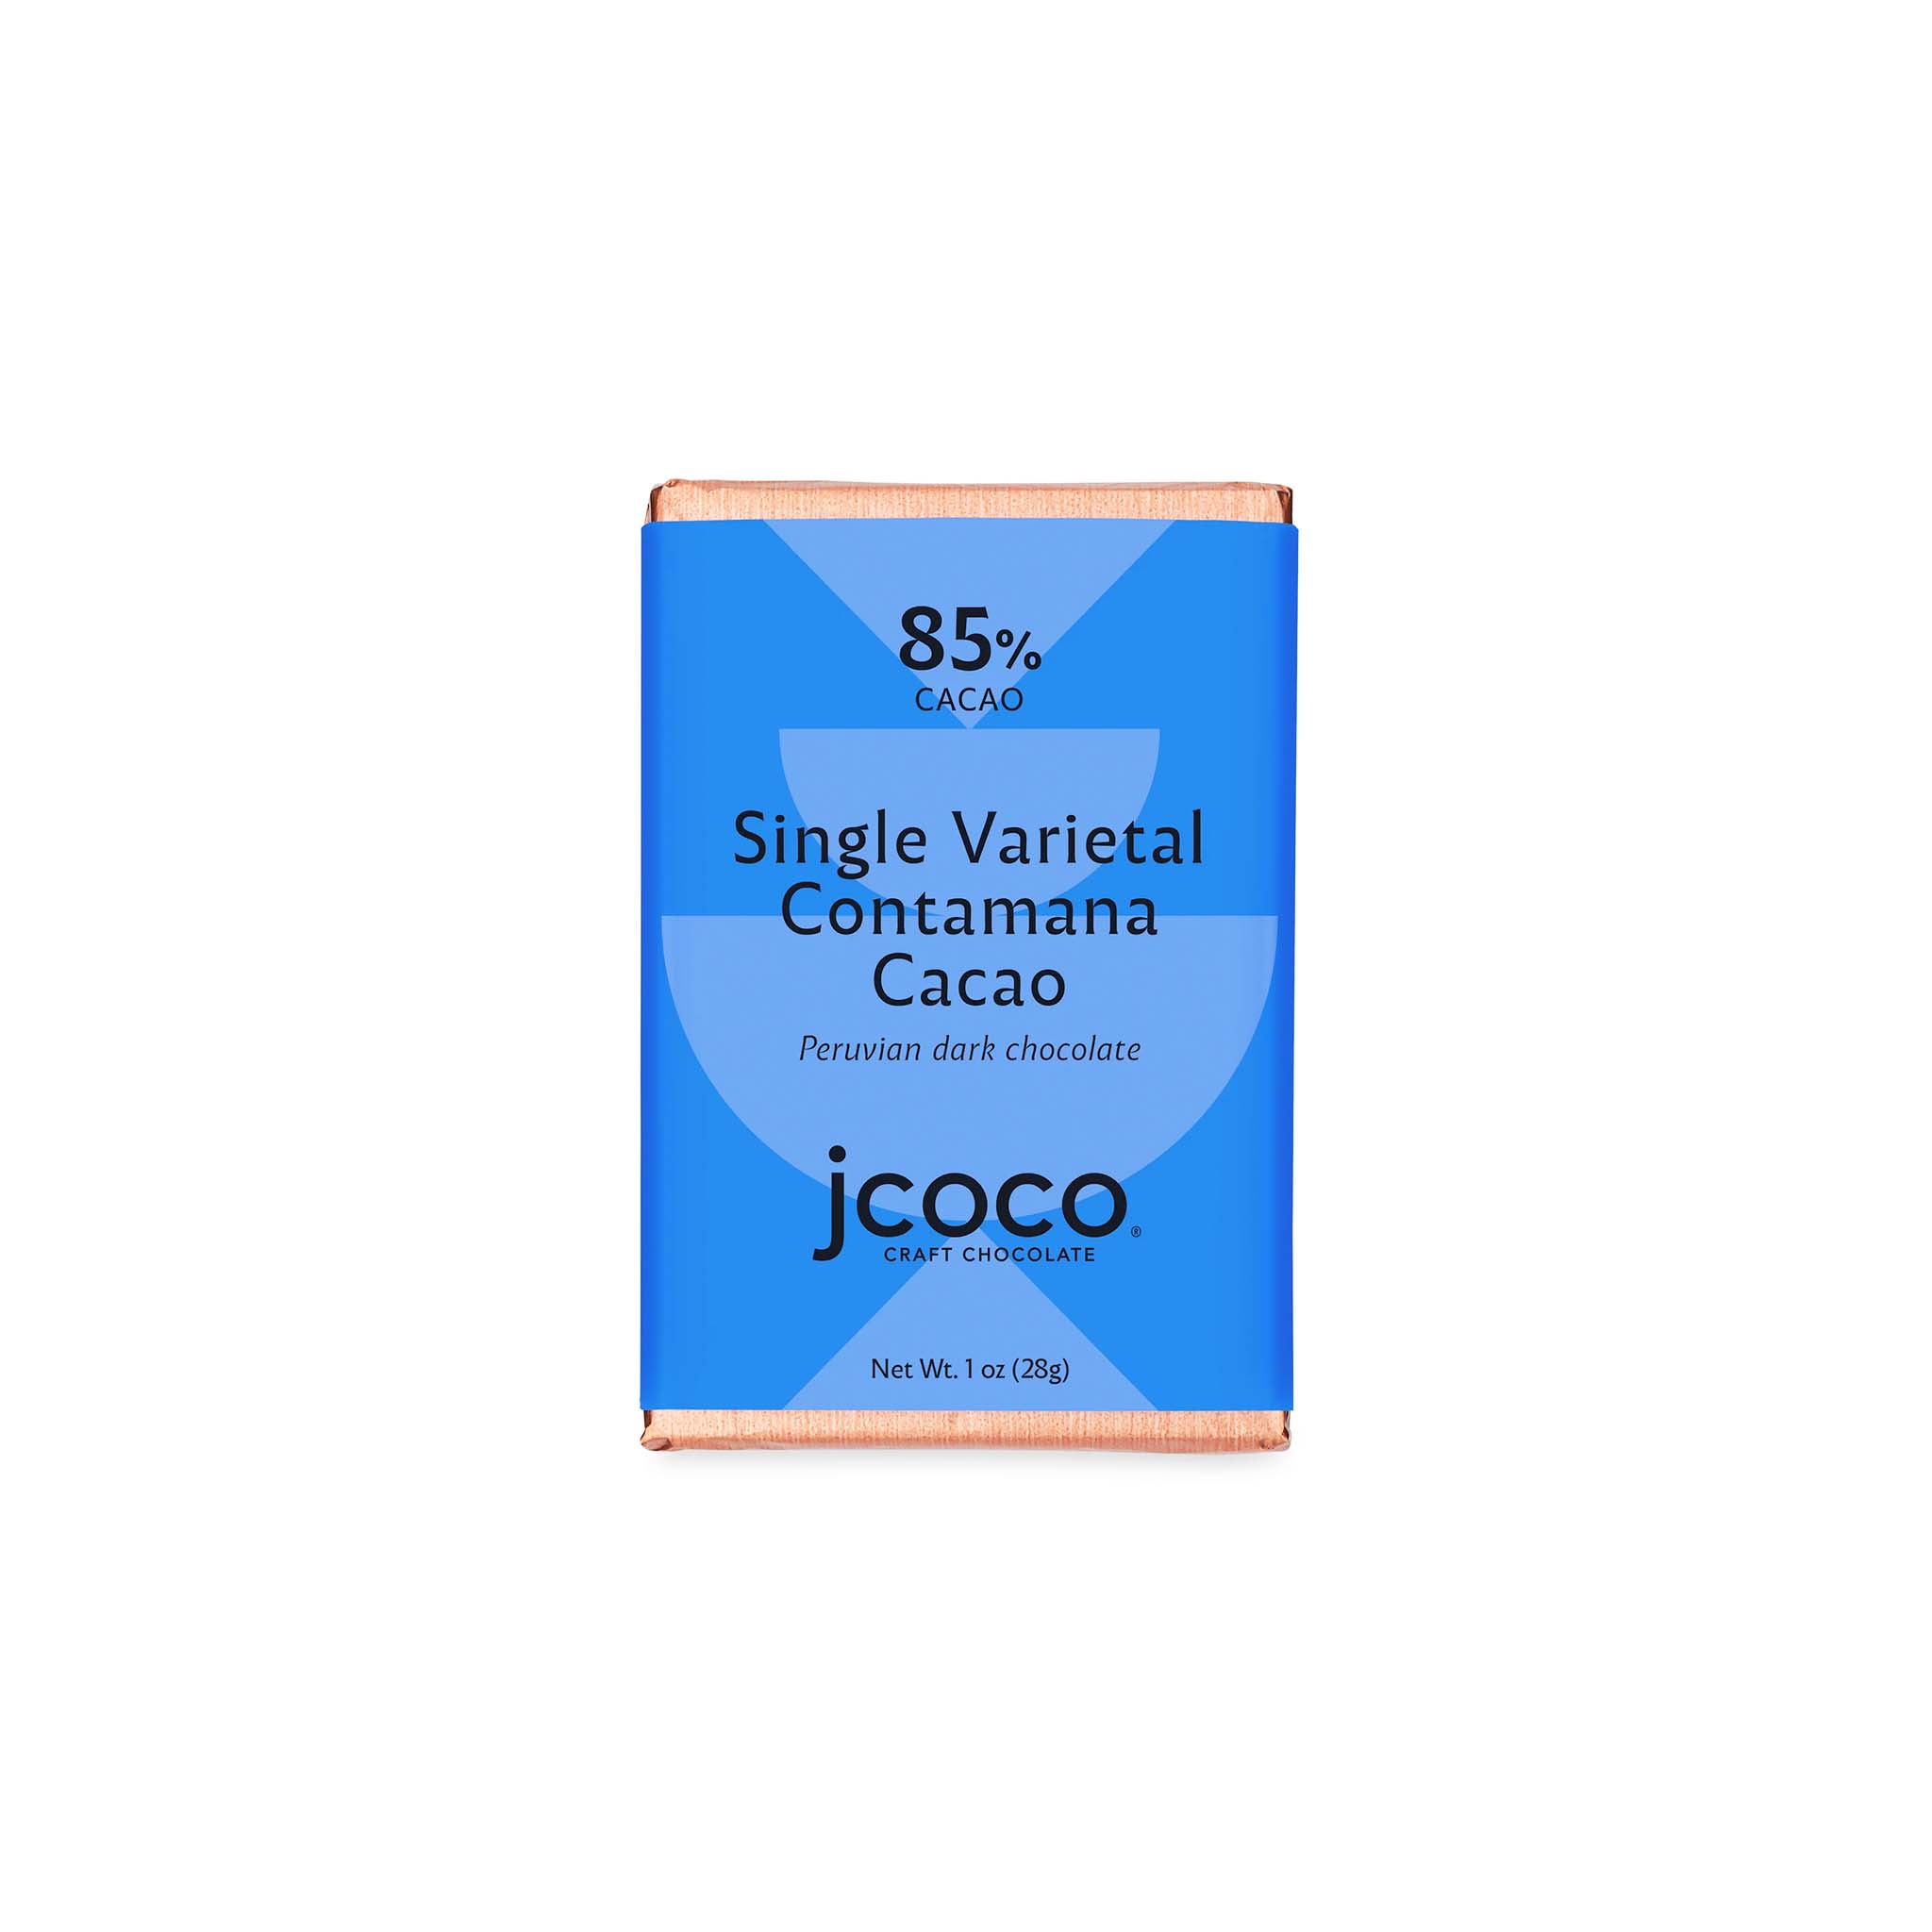 JCOCO SINGLE VARIETAL CONTAMANA CACAO 85% DARK CHOCOLATE 28G